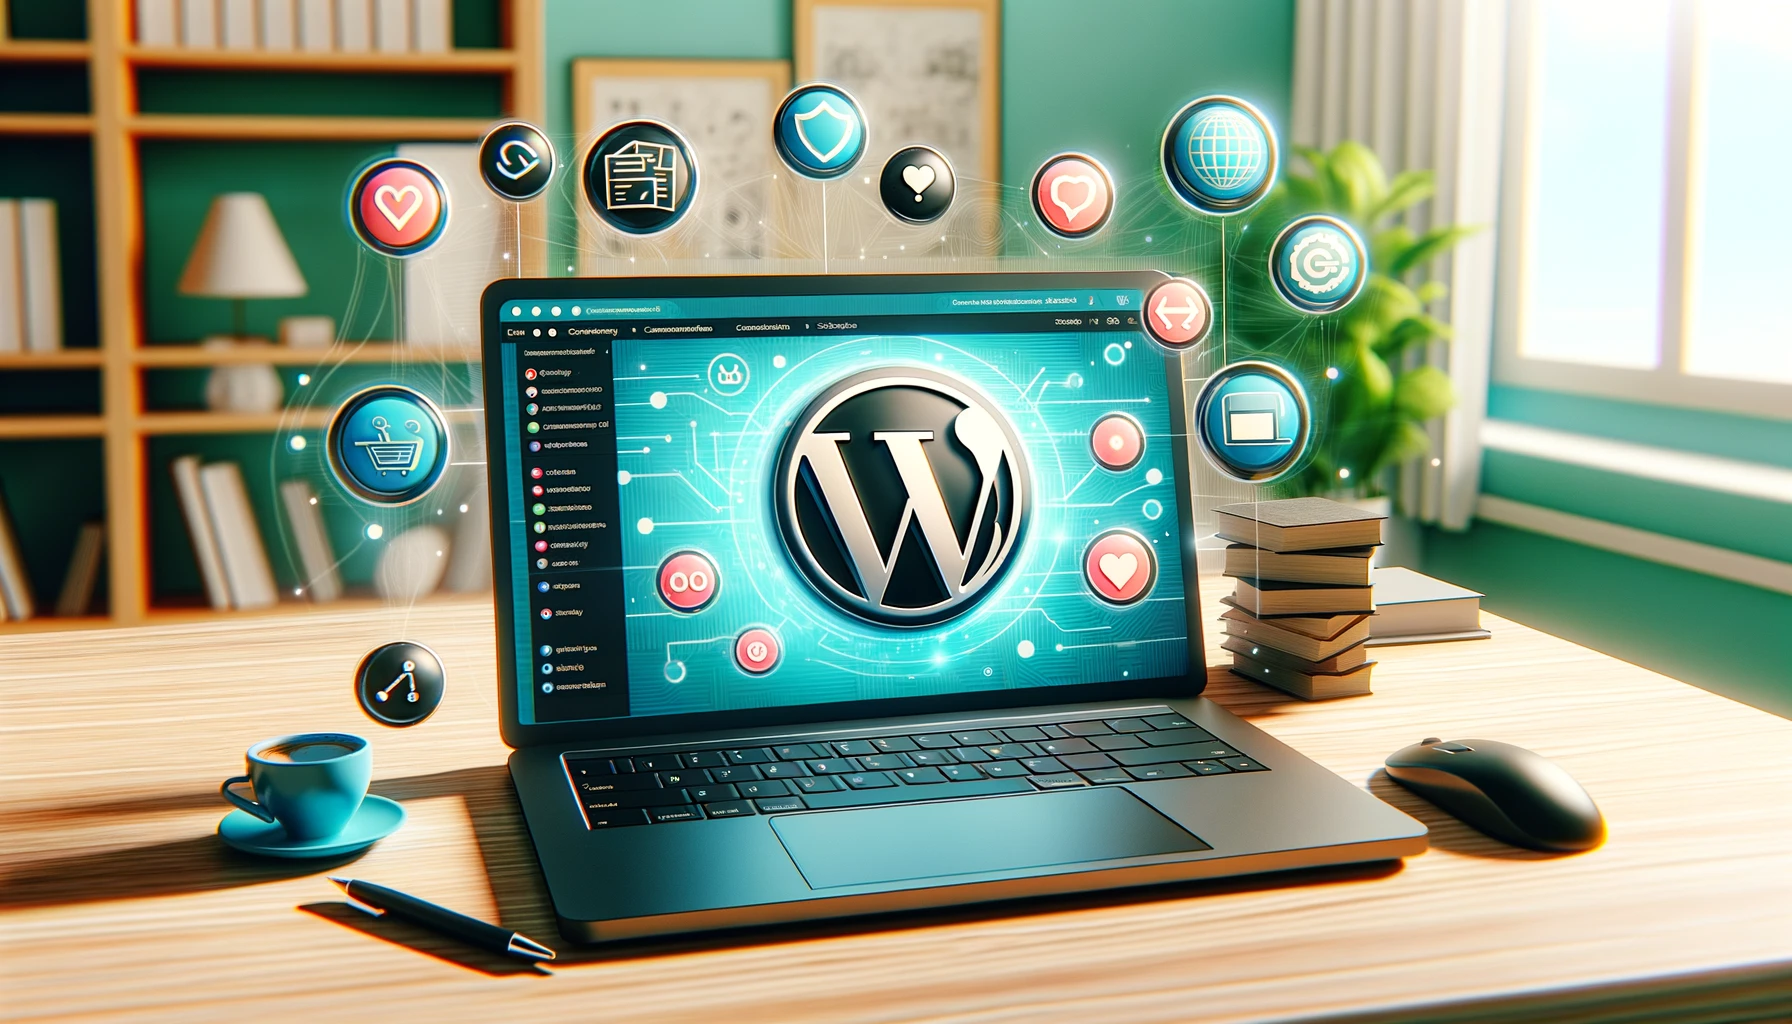 image featuring a sleek, modern laptop open on a desk, displaying a vibrant WordPress dashboard screen